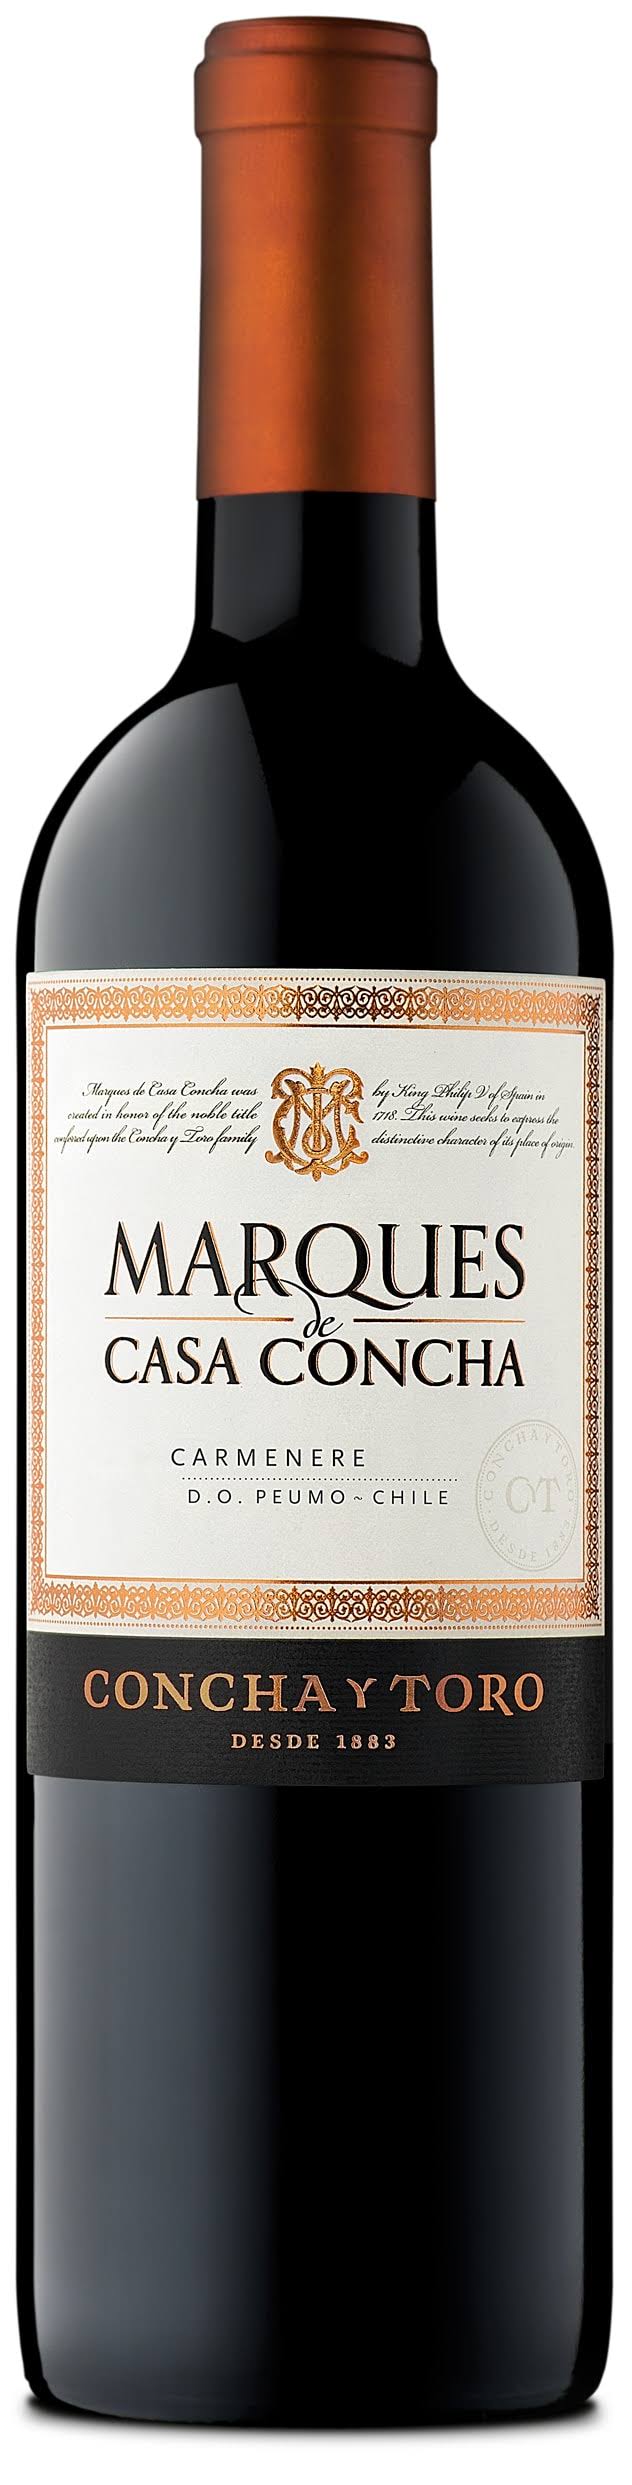 Concha y Toro Marques de Casa Concha Carmenere Wine - 25.32oz